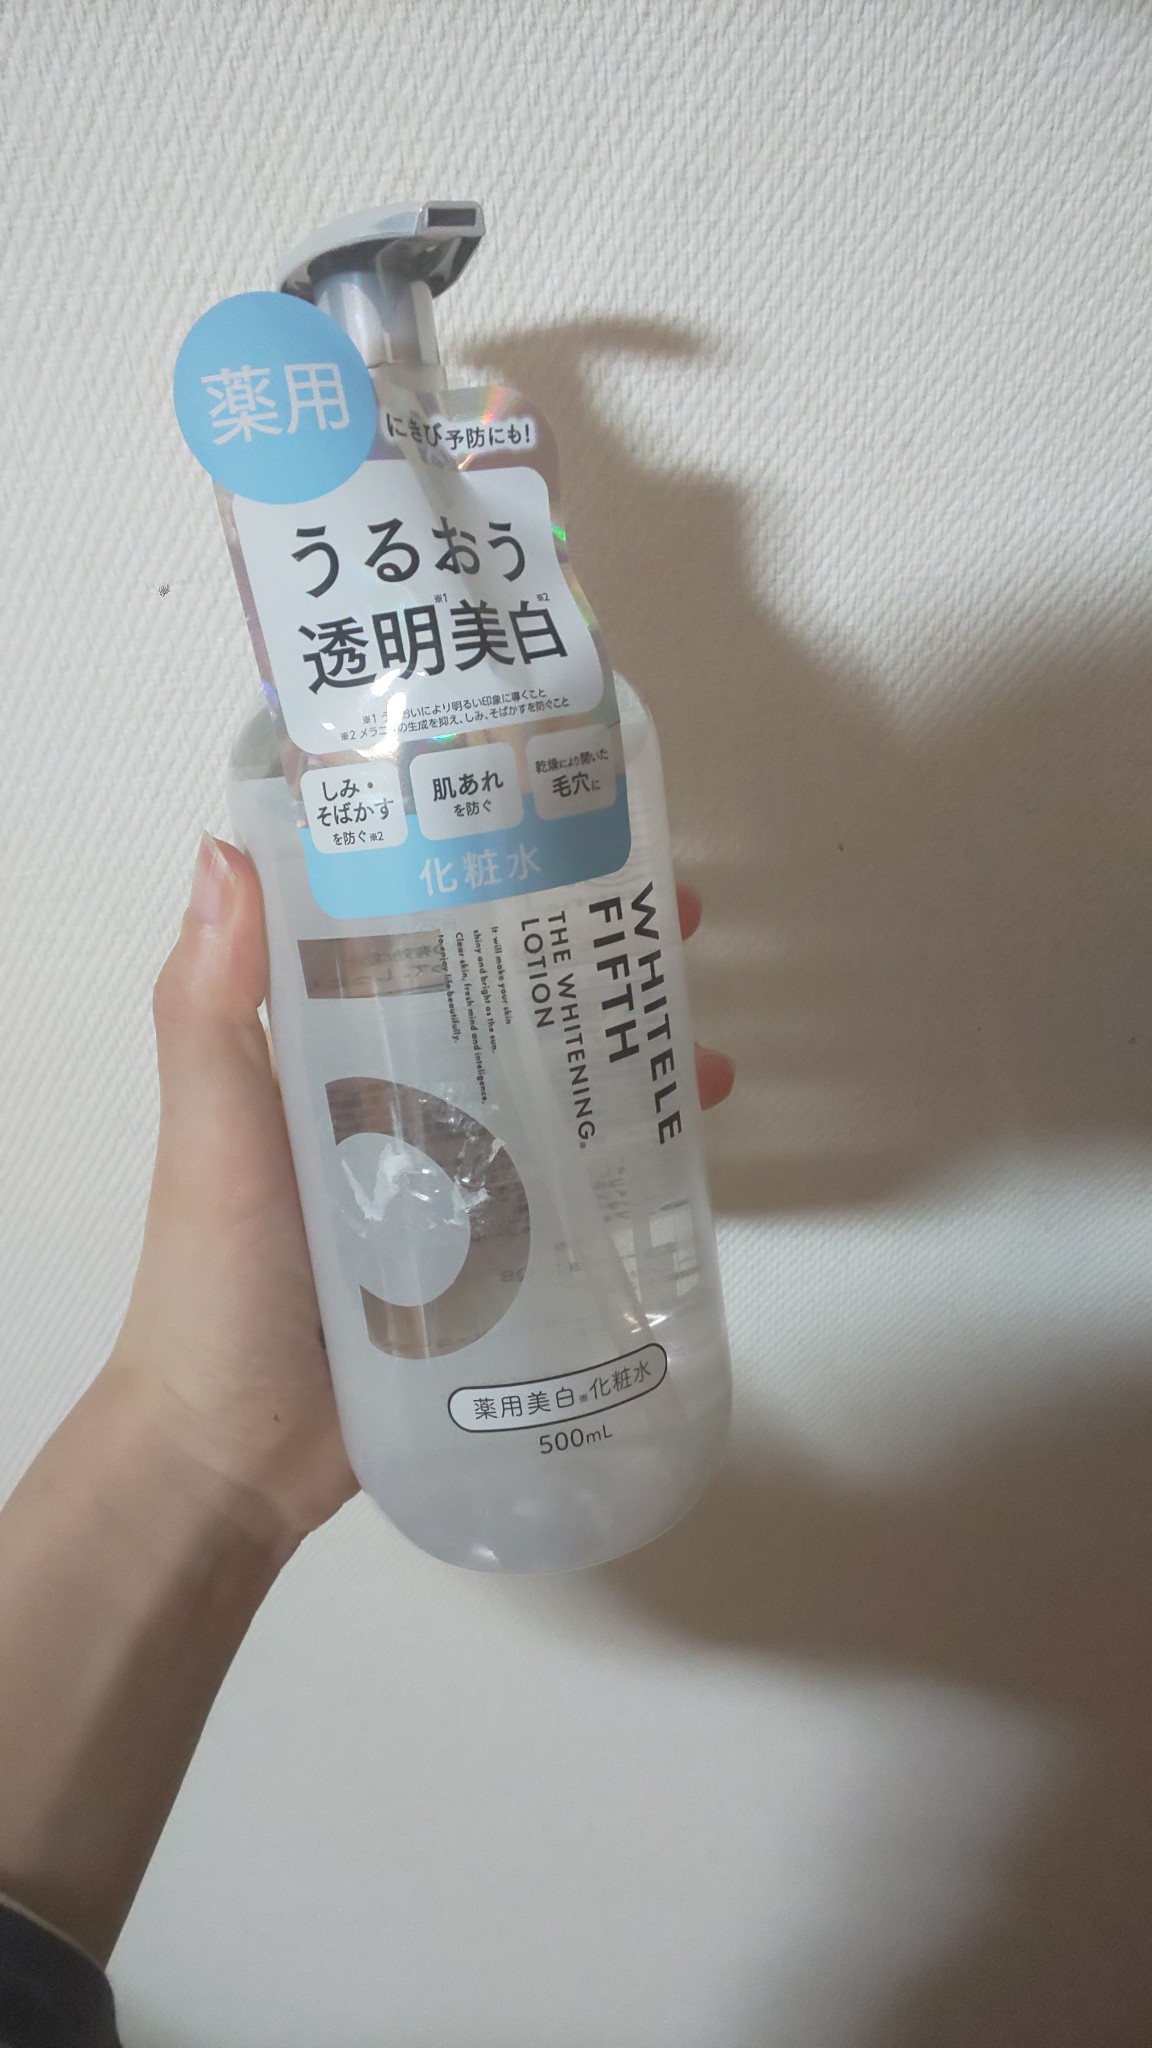 WHITELE FIFTH(ホワイトルフィフス) / 薬用美白化粧水 500mlの公式商品